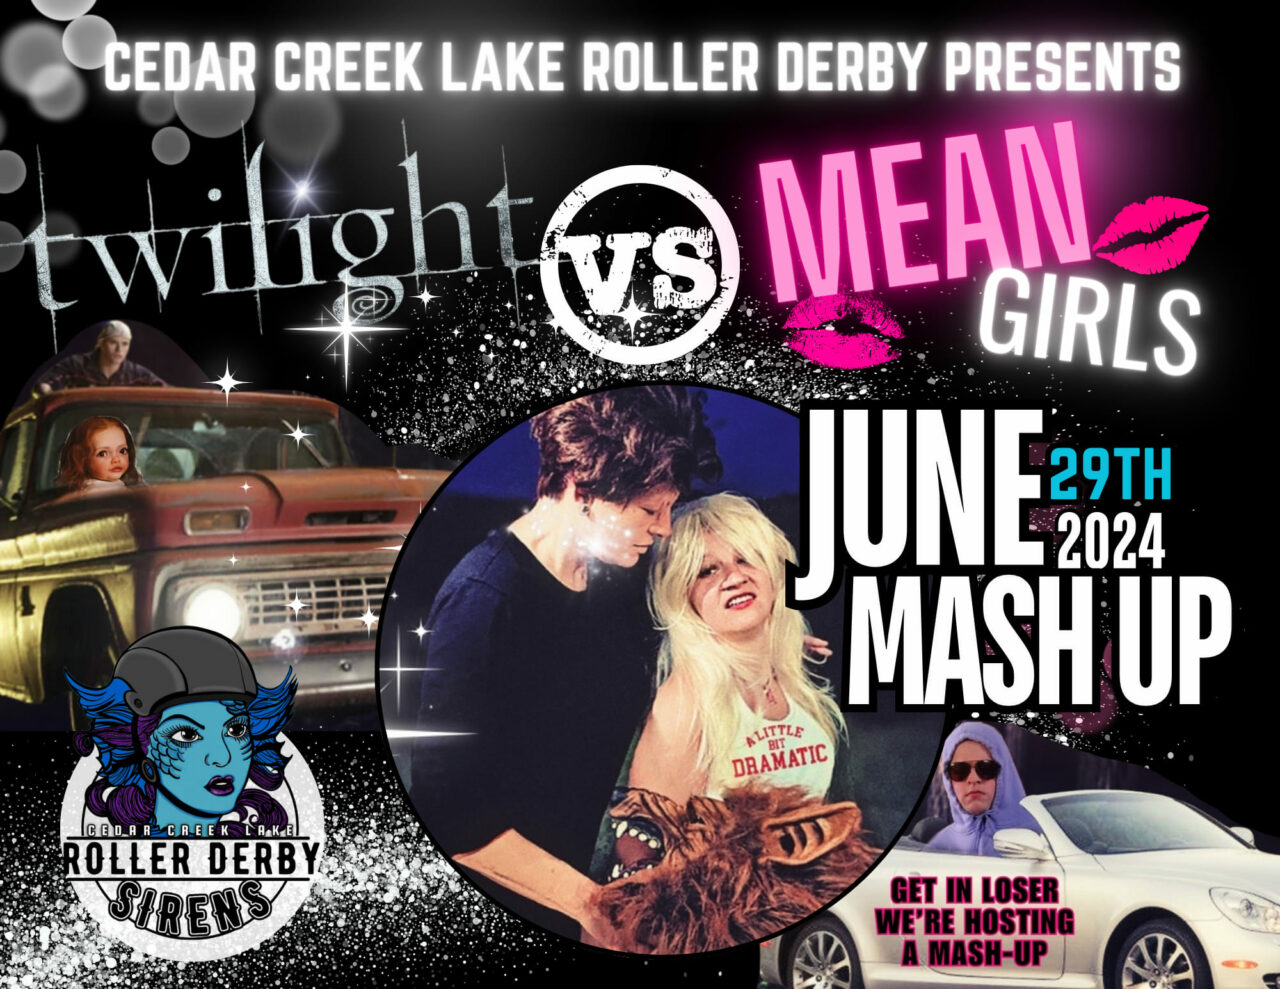 Cedar Creek Roller Derby: Twilight Versus Mean Girls 2 cedar creek roller derby cedarcreeklake.online